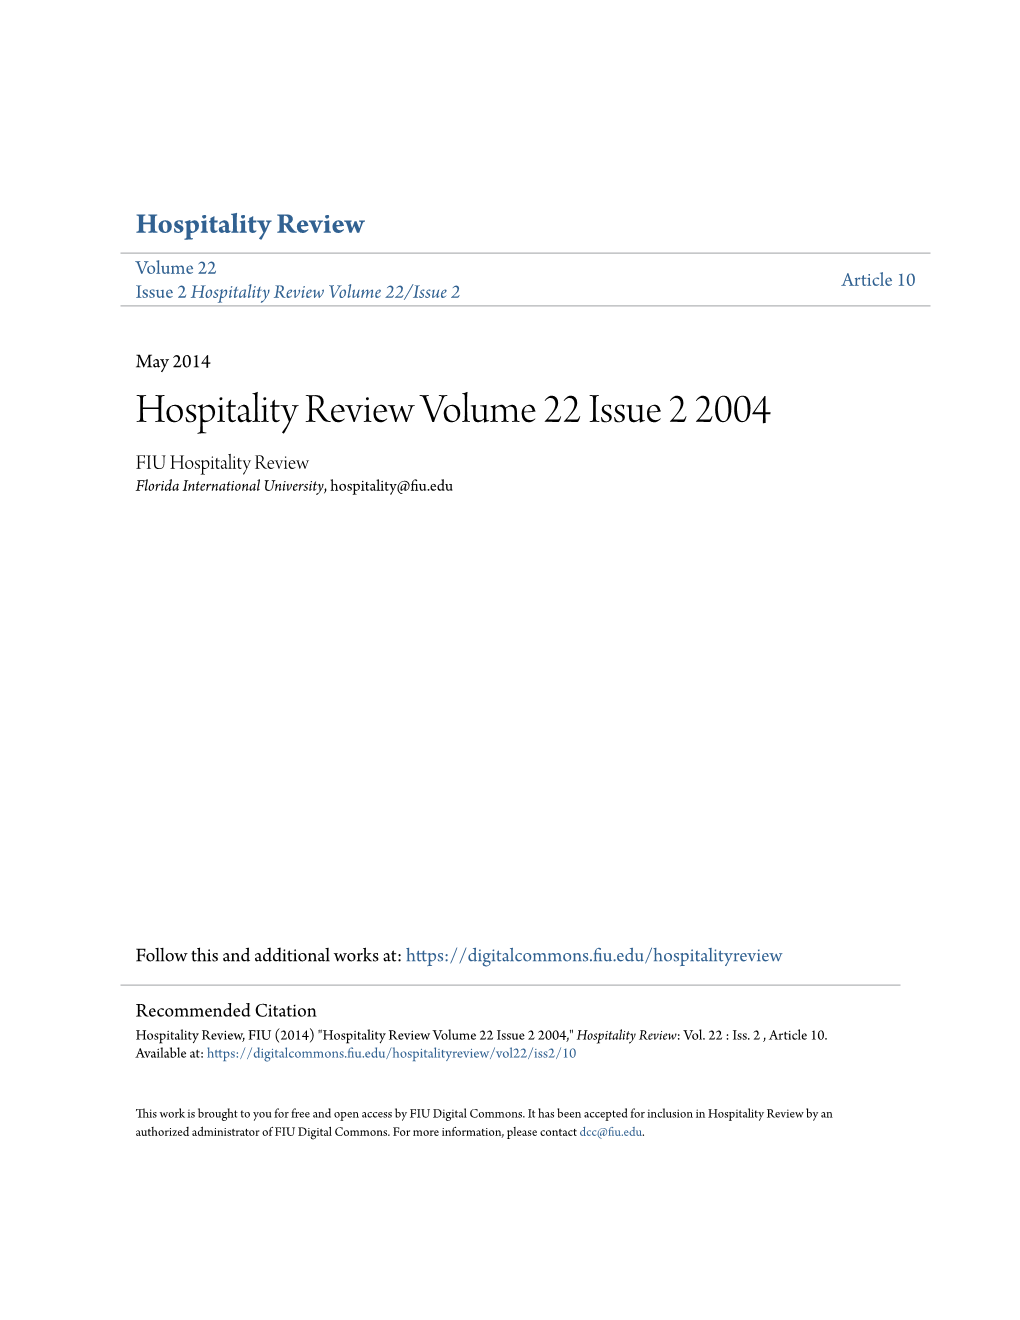 Hospitality Review Volume 22 Issue 2 2004 FIU Hospitality Review Florida International University, Hospitality@Fiu.Edu